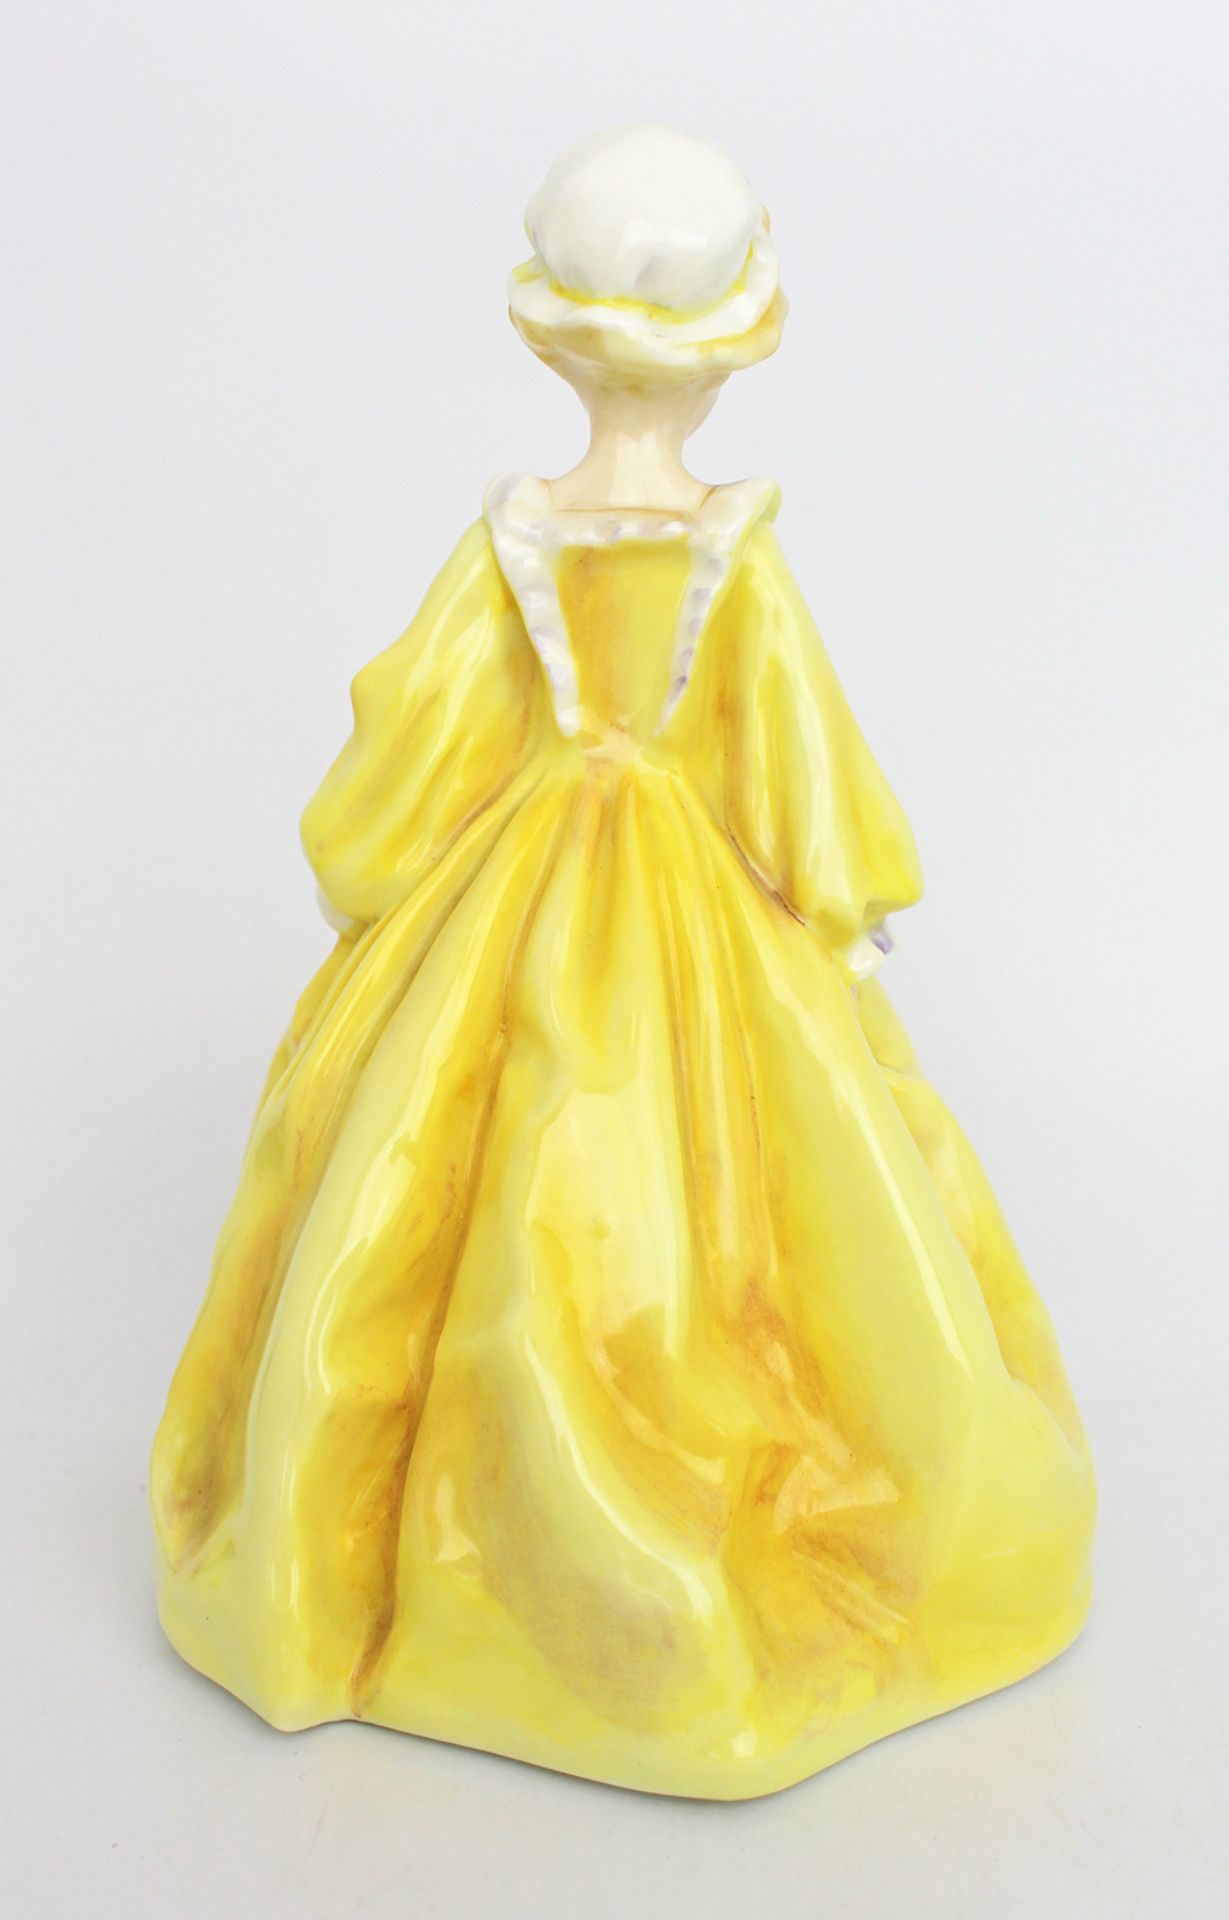 Royal Worcester Figurine Yellow Grandmothers Dress - Image 2 of 3